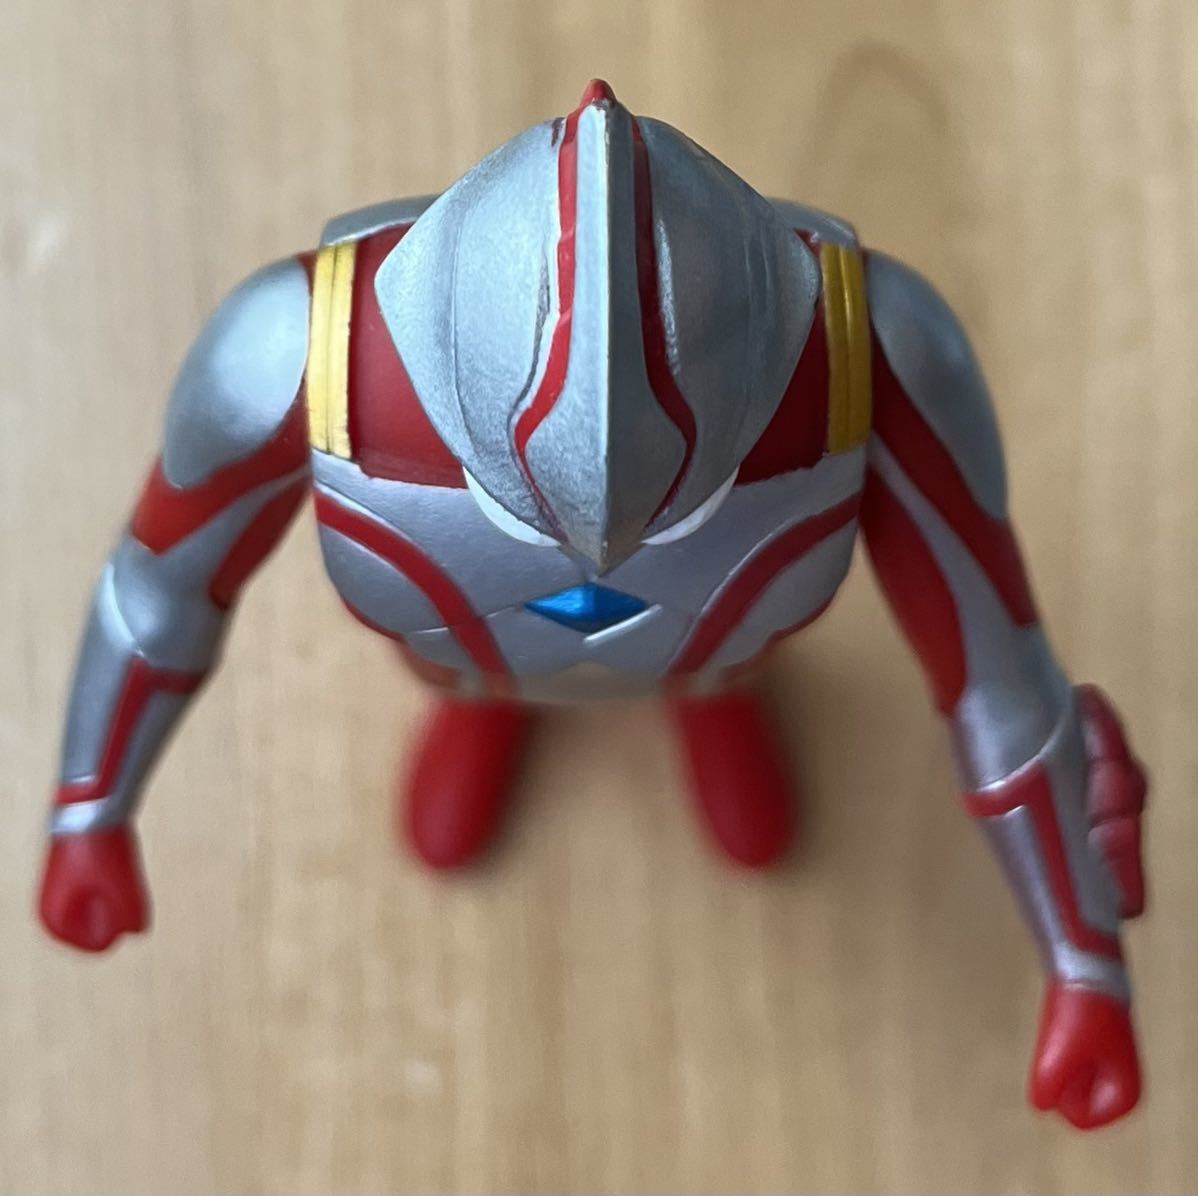 * Ultraman Ultra герой Ultraman Mebius б/у 2013 Bandai sofvi фигурка Live автограф 